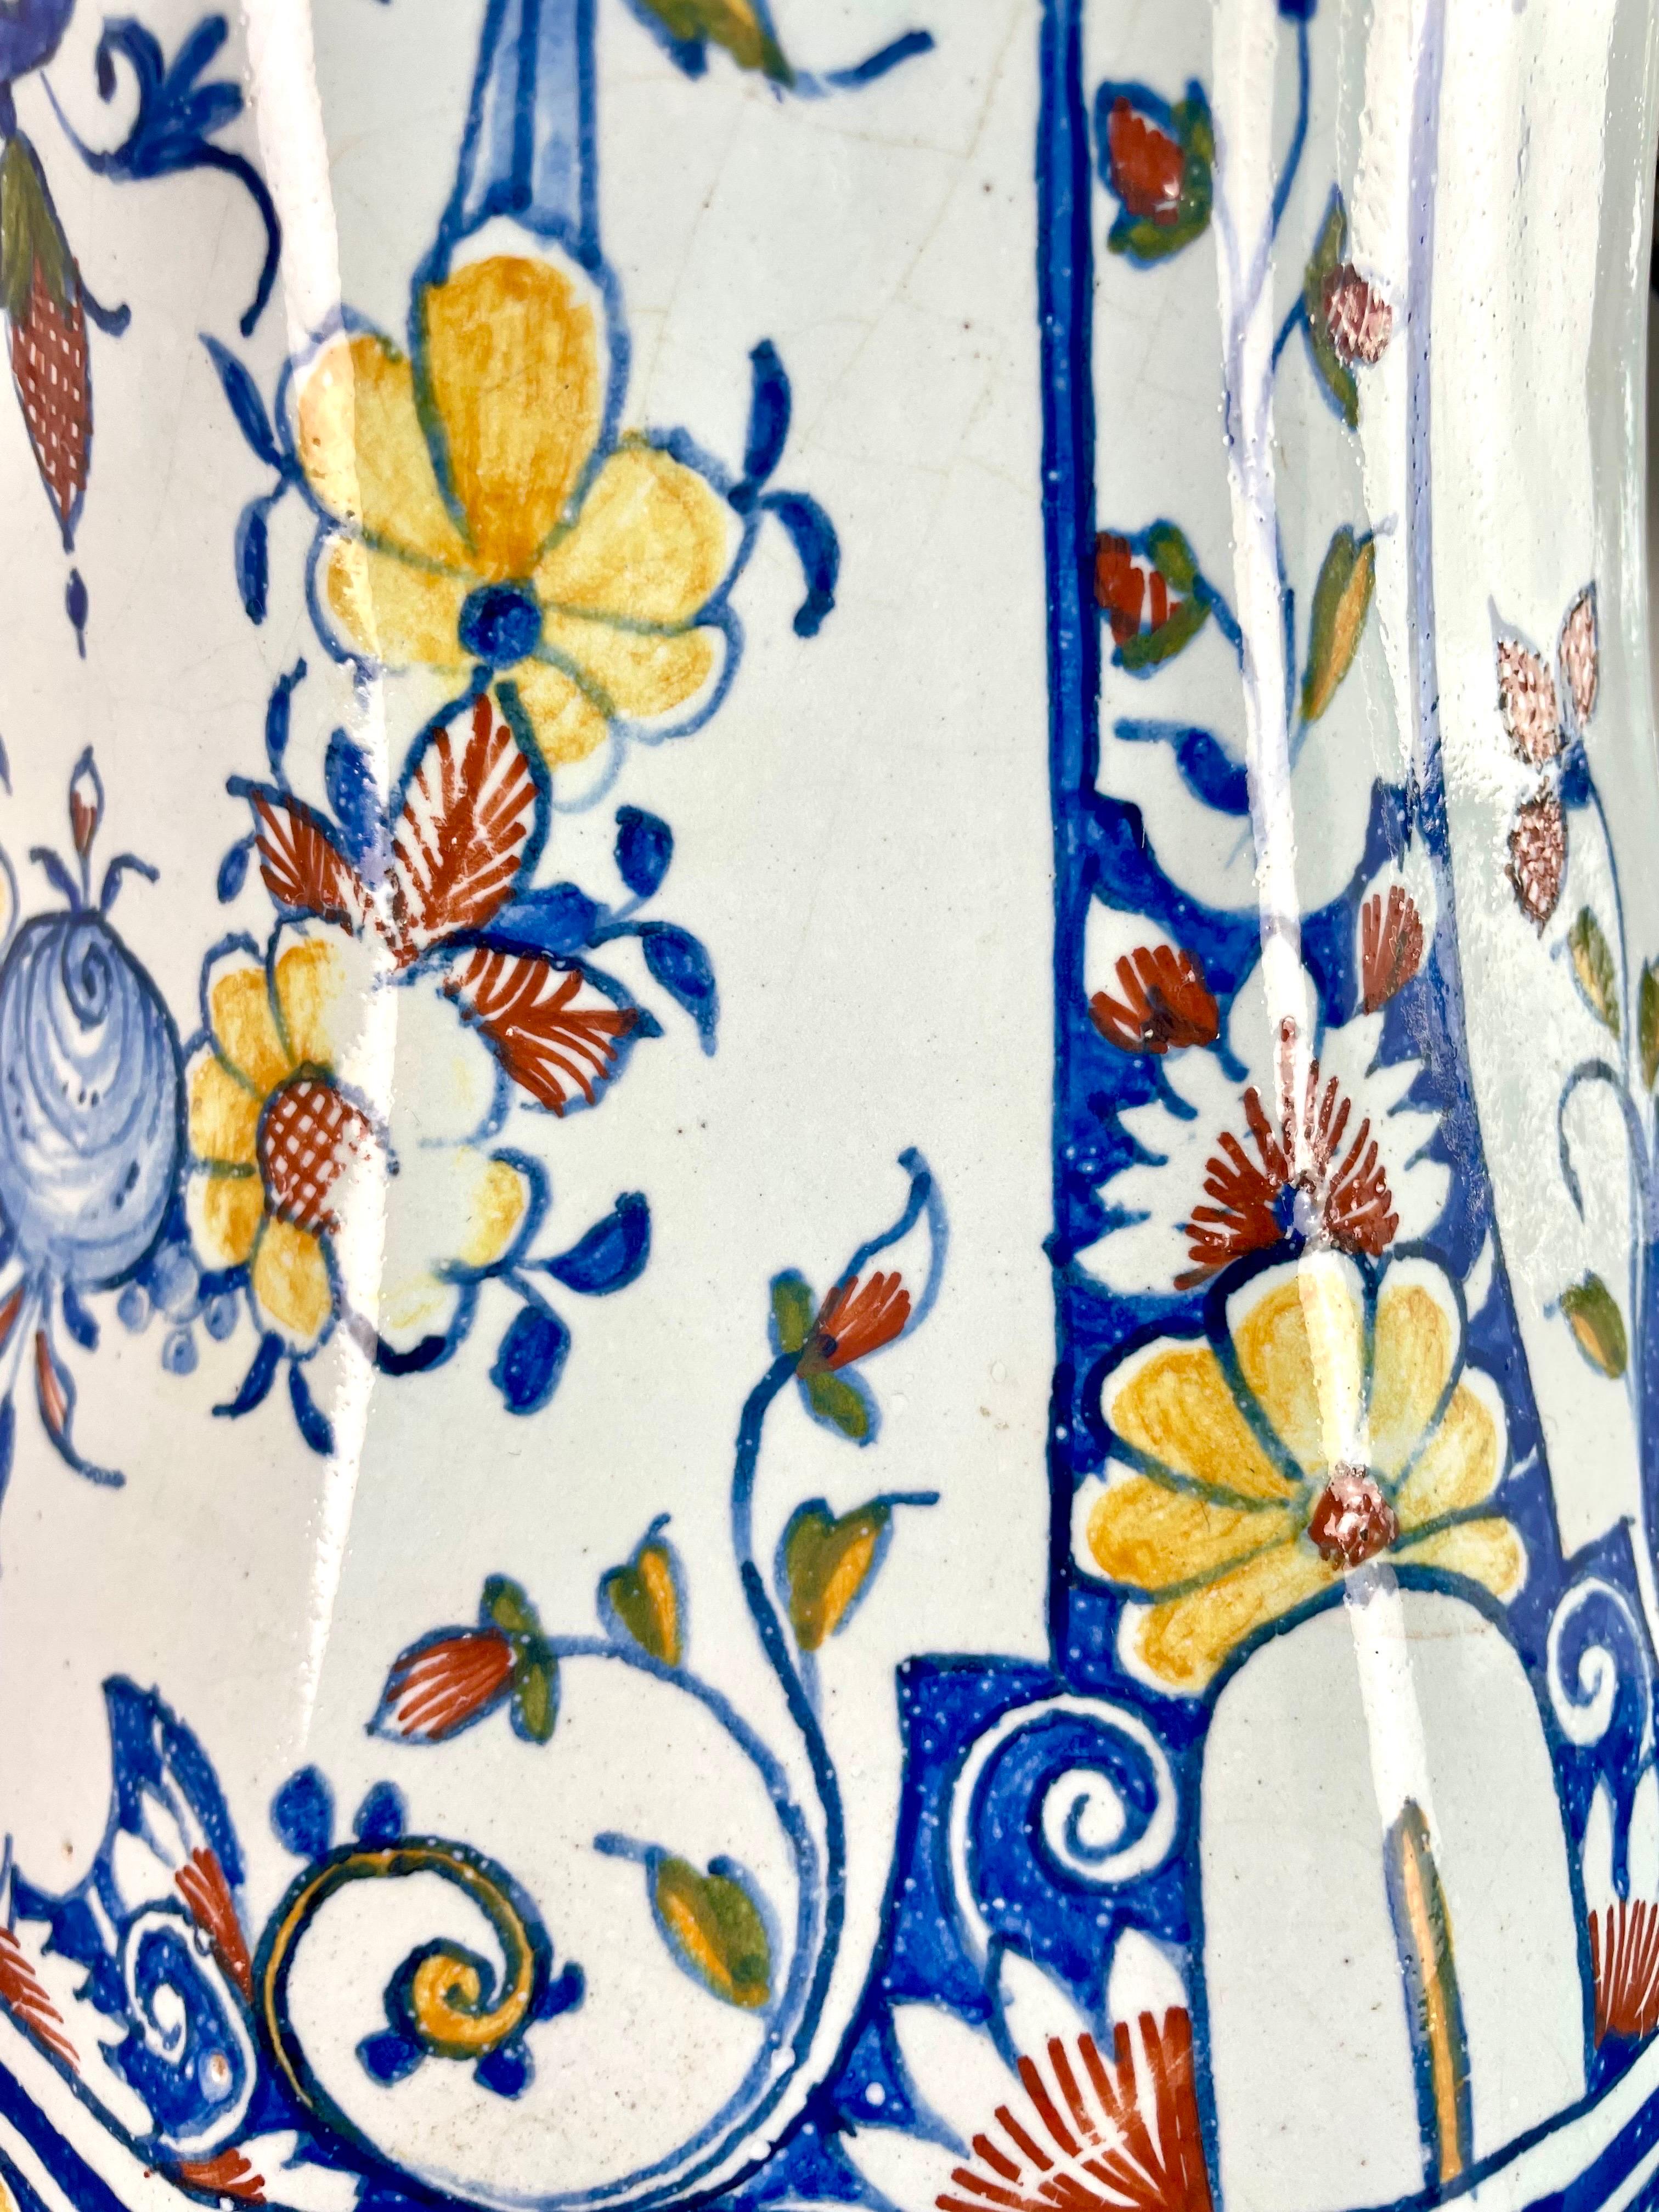 Vase - Rouen earthenware fountain, flower pot - blue white - 18th century France For Sale 2